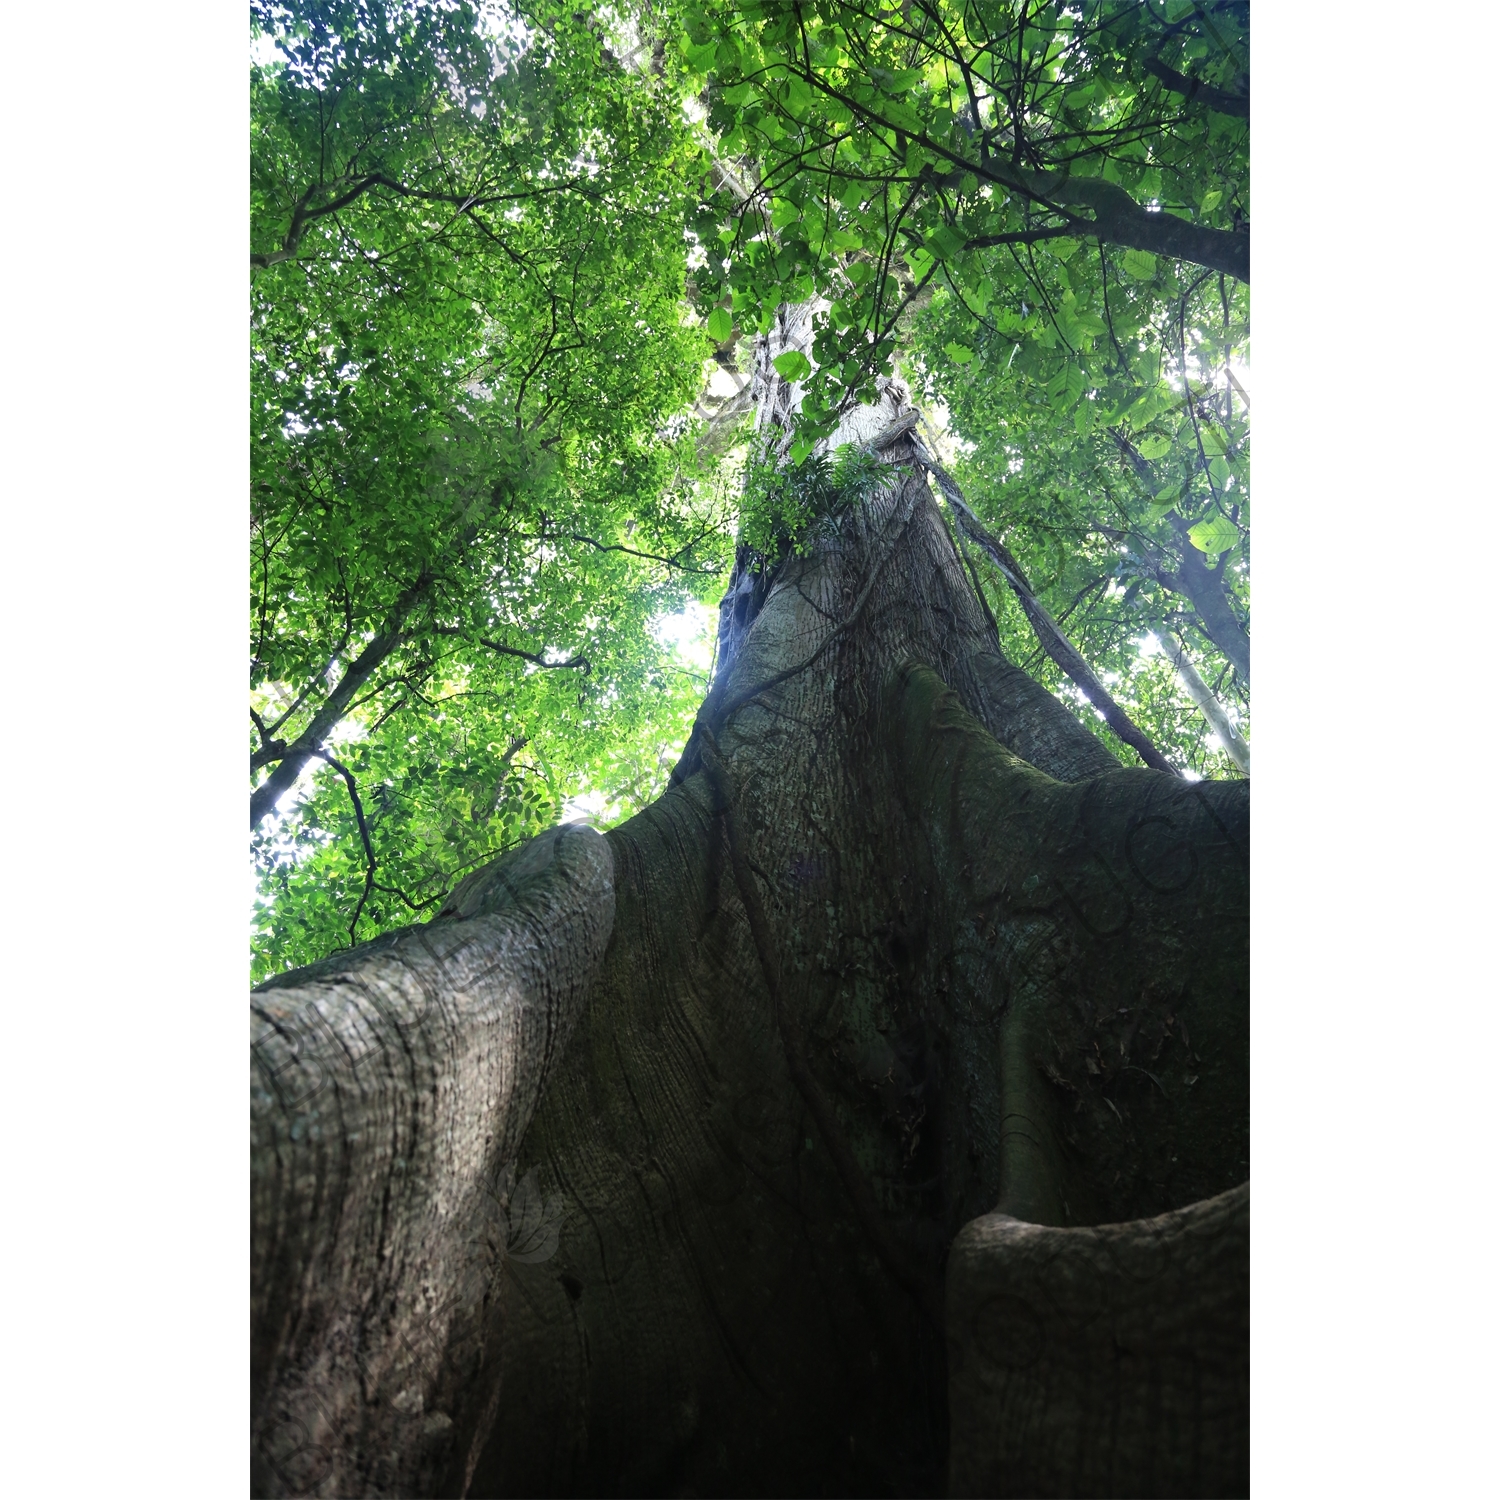 Giant Kapok/Ceiba Tree in Arenal Volcano National Park